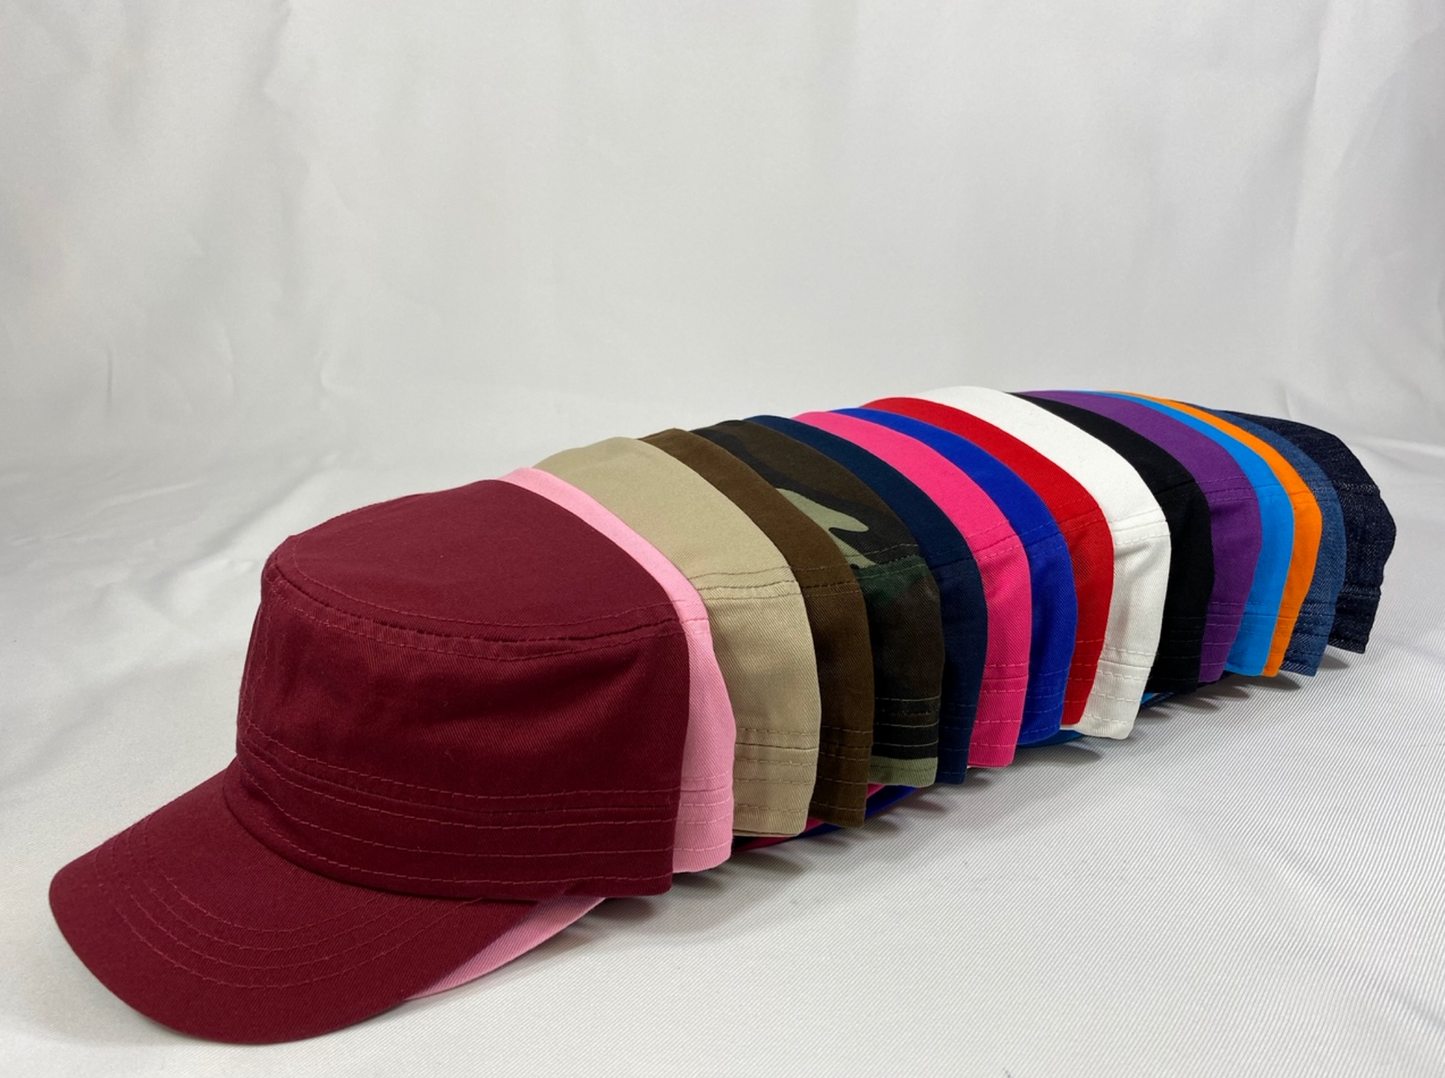 Soccer Shoe Rhinestone Hat, Soccer Hat, Rhinestone Hat, Embroidered Hats, Rhinestone Cap, Hats, Caps